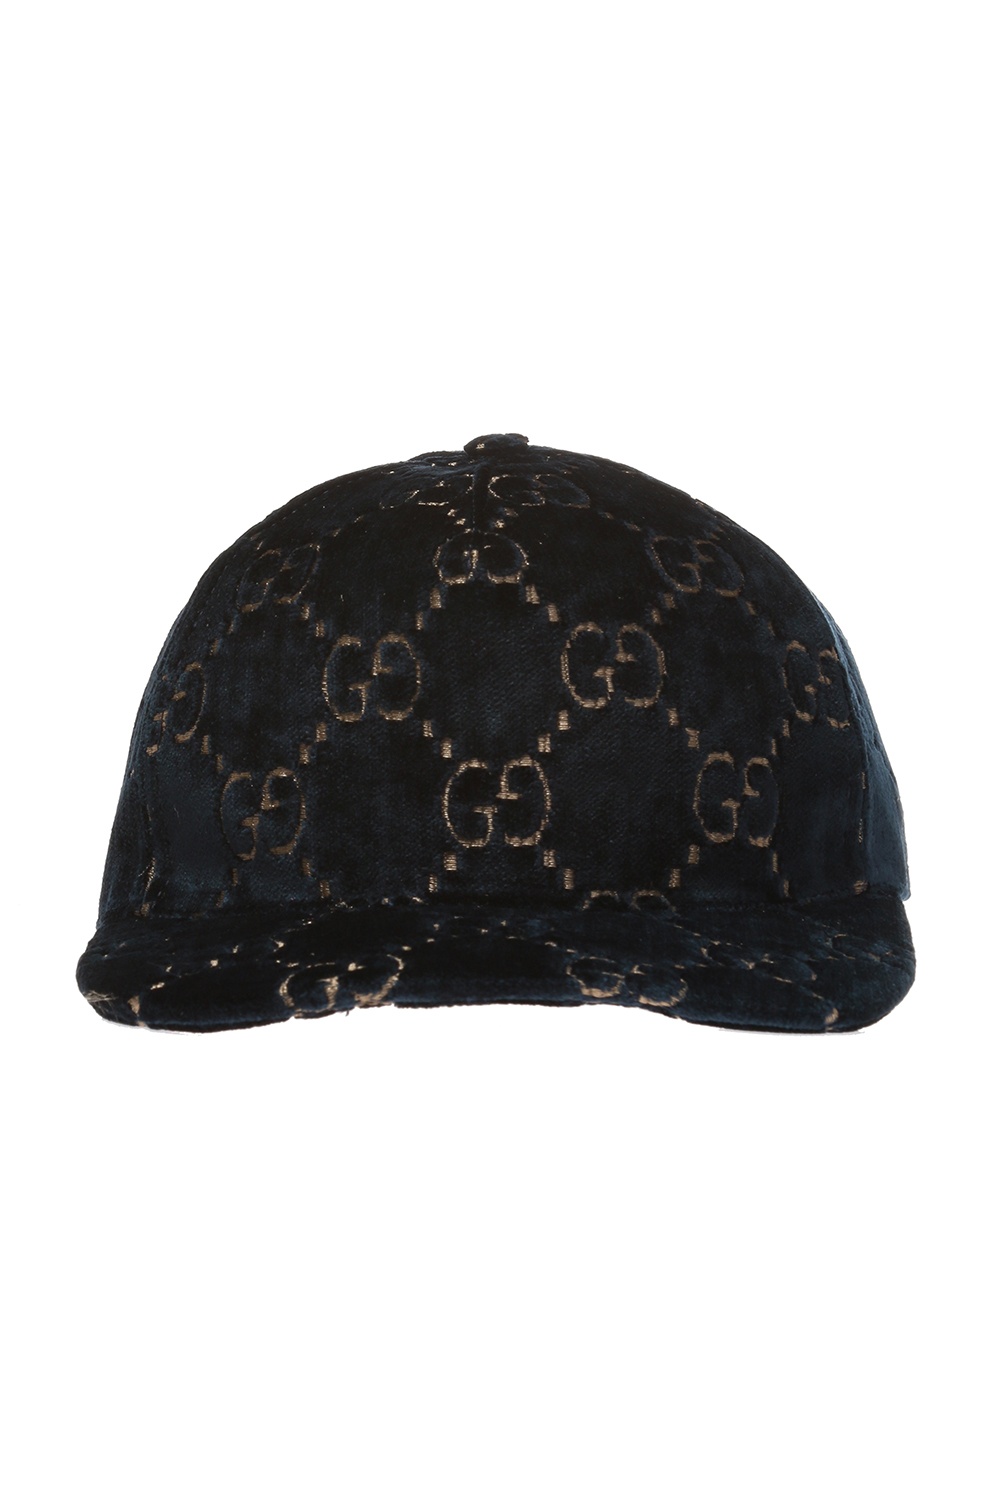 Supreme Louis Vuitton Hat Black on Sale, SAVE 38% 